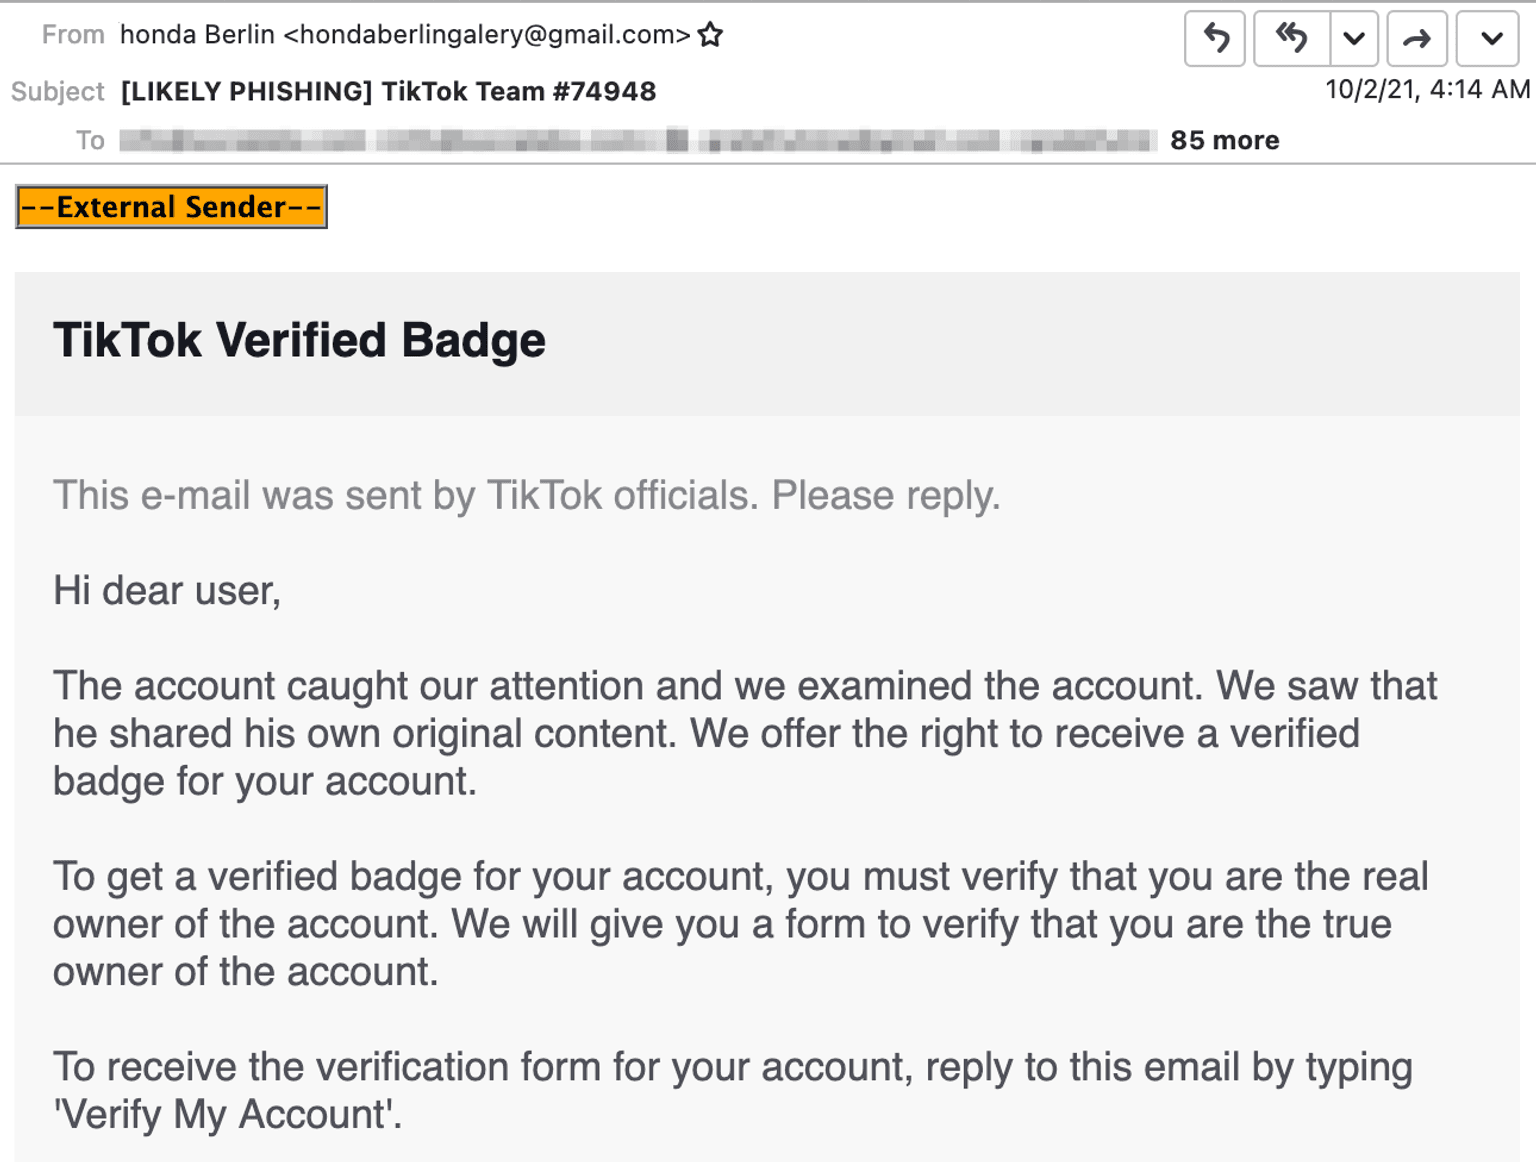 Tiktok phishing email for verified badge